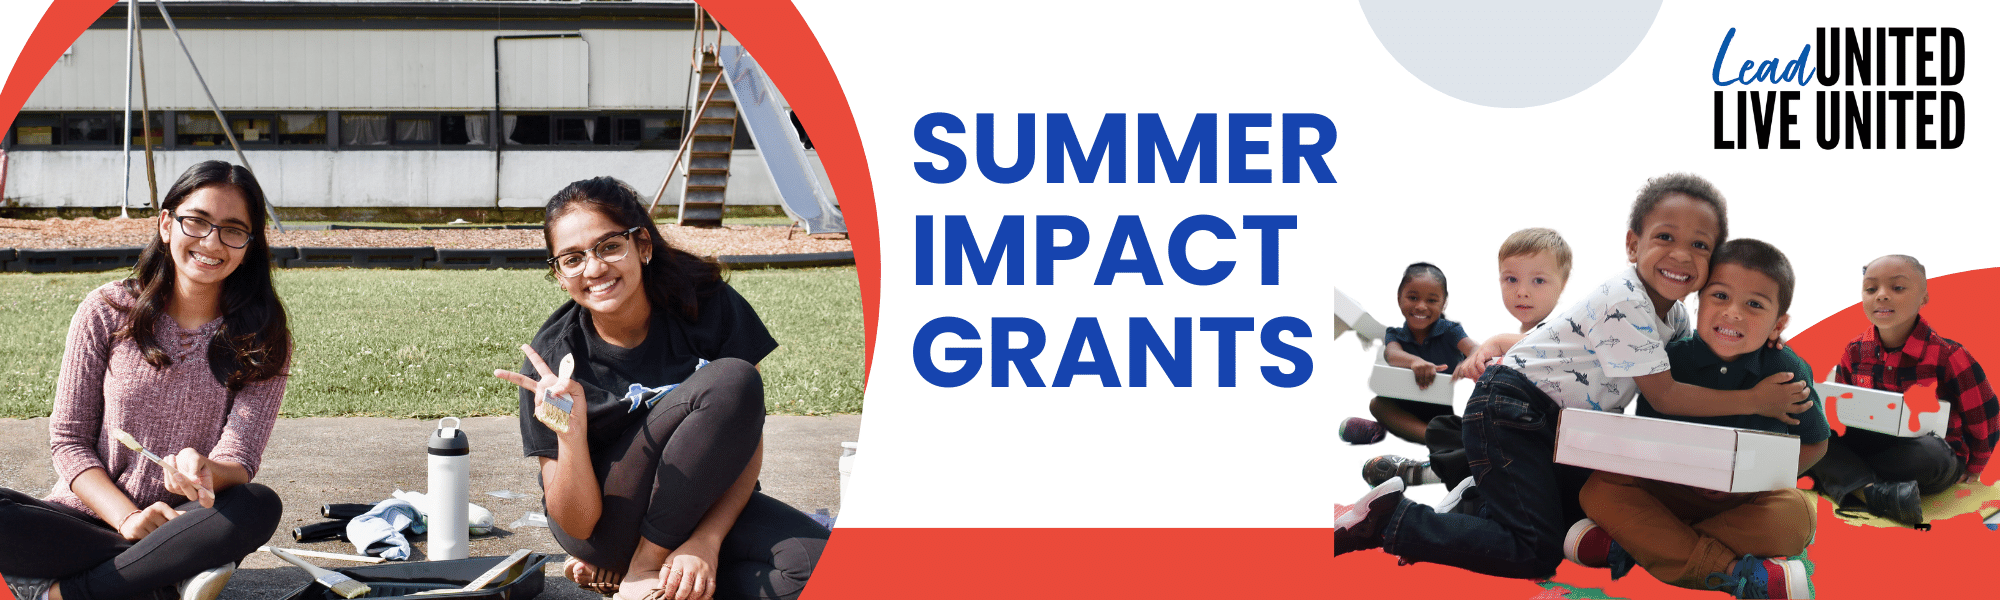 summer impact grants with children